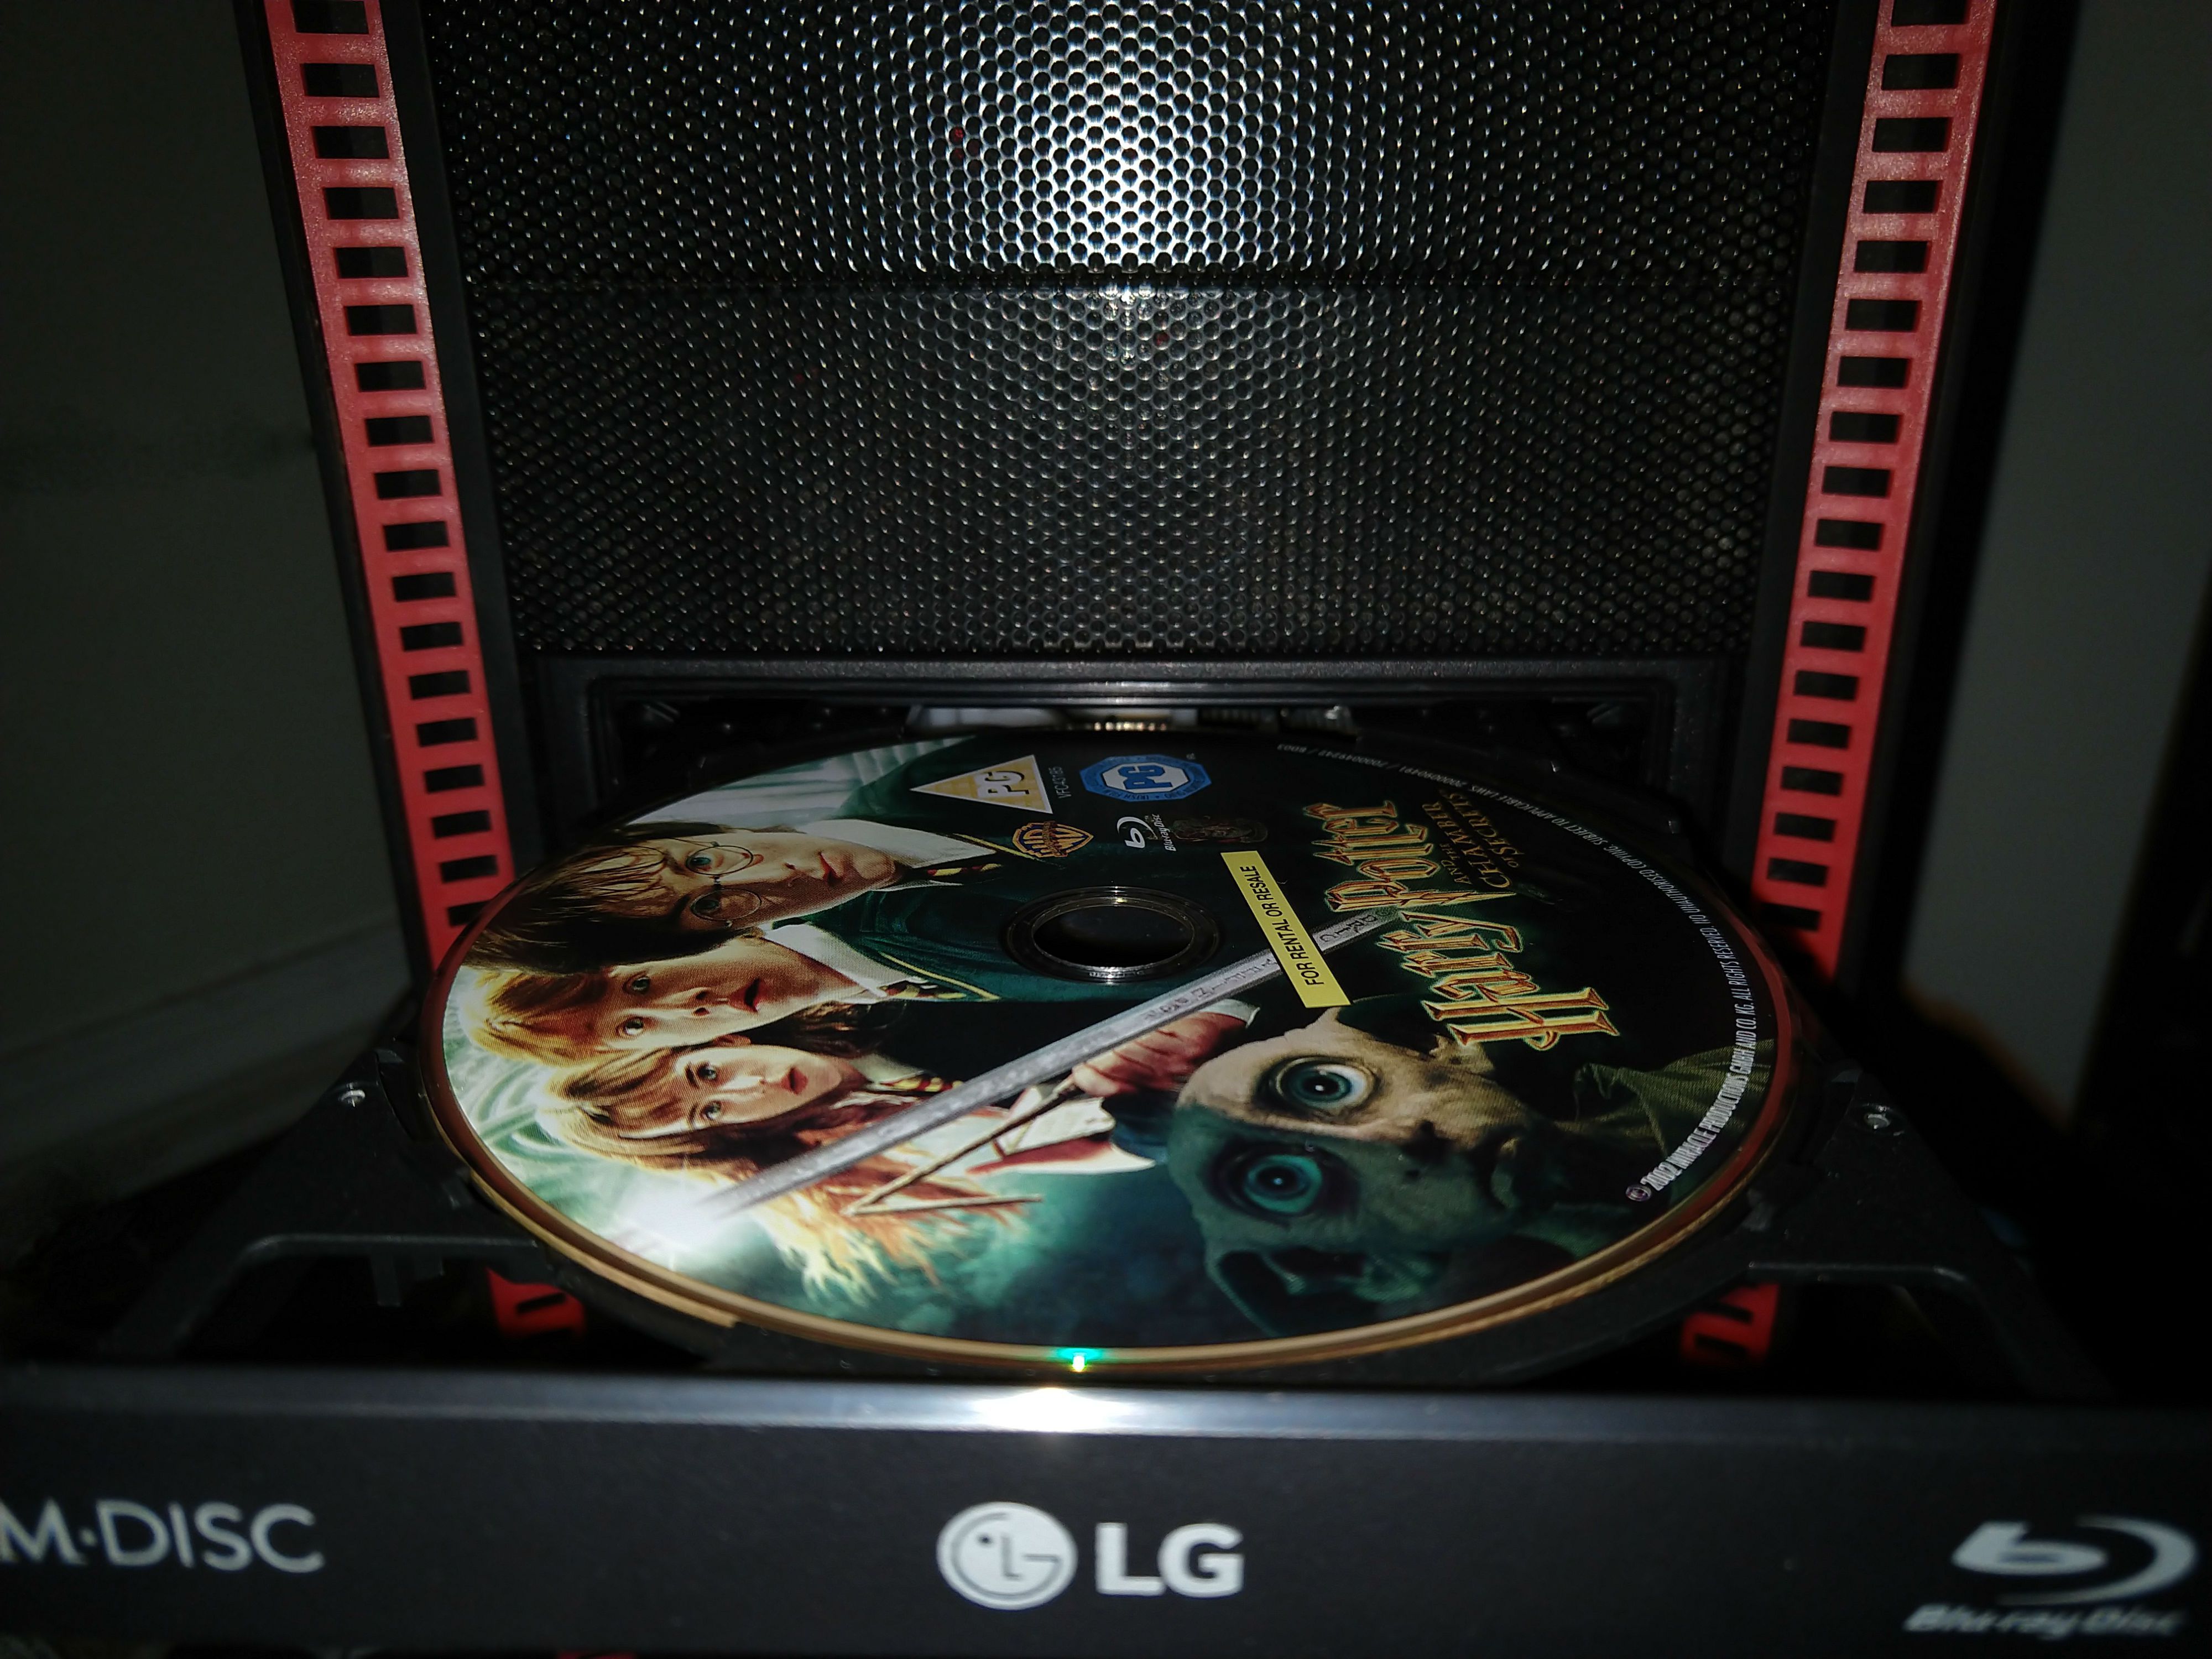 Диск Blu-ray, вставленный в привод Blu-ray.